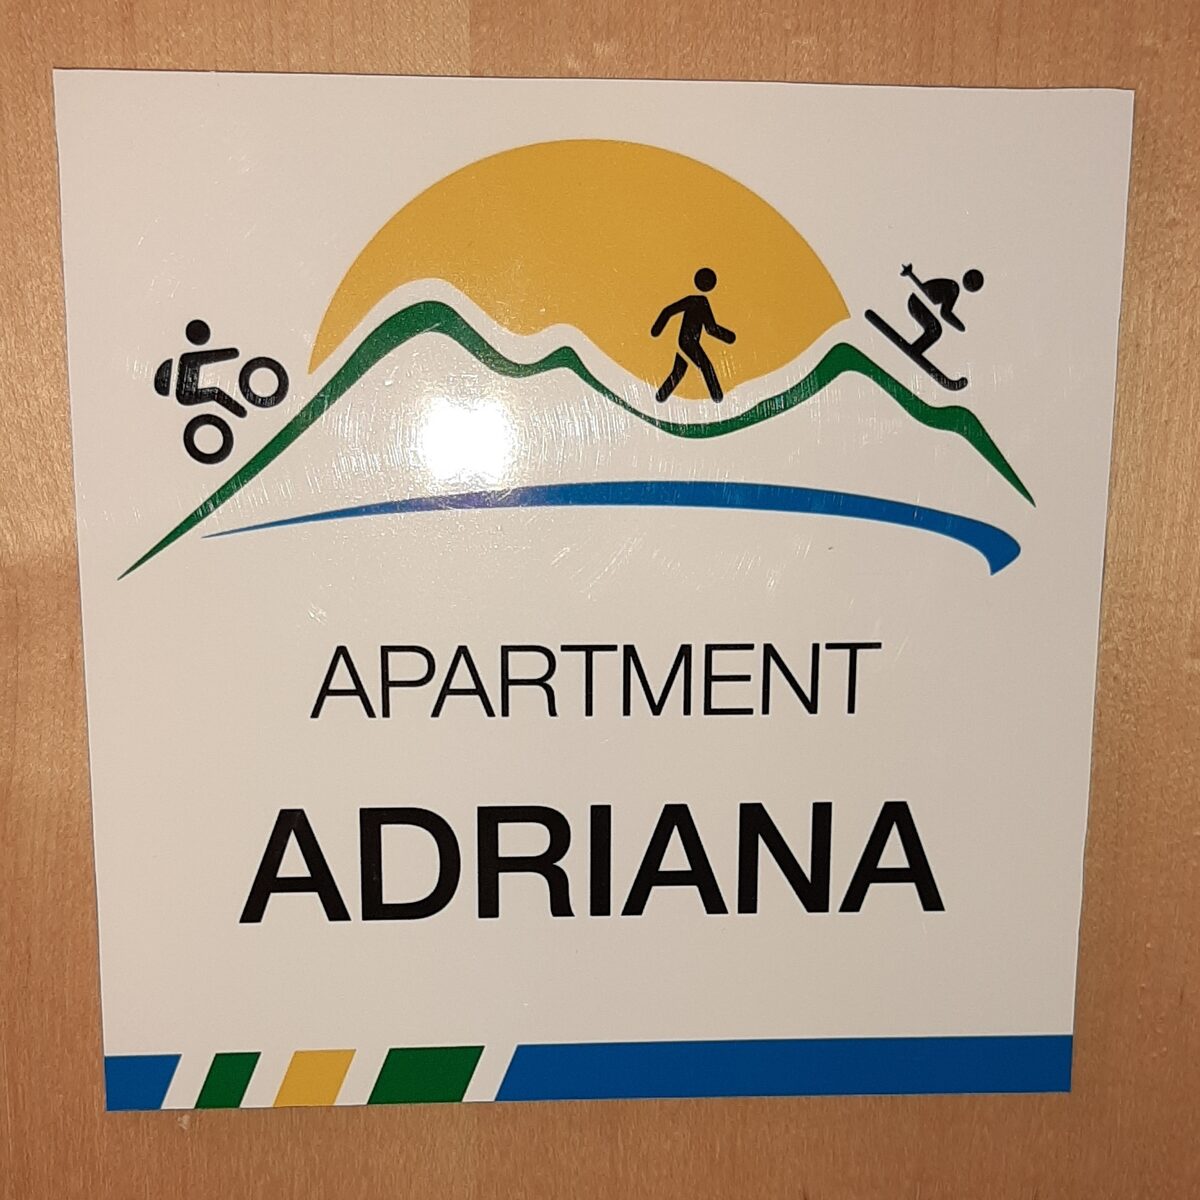 Apartement - Nuhnestrasse 2b | Winterberg - Adriana